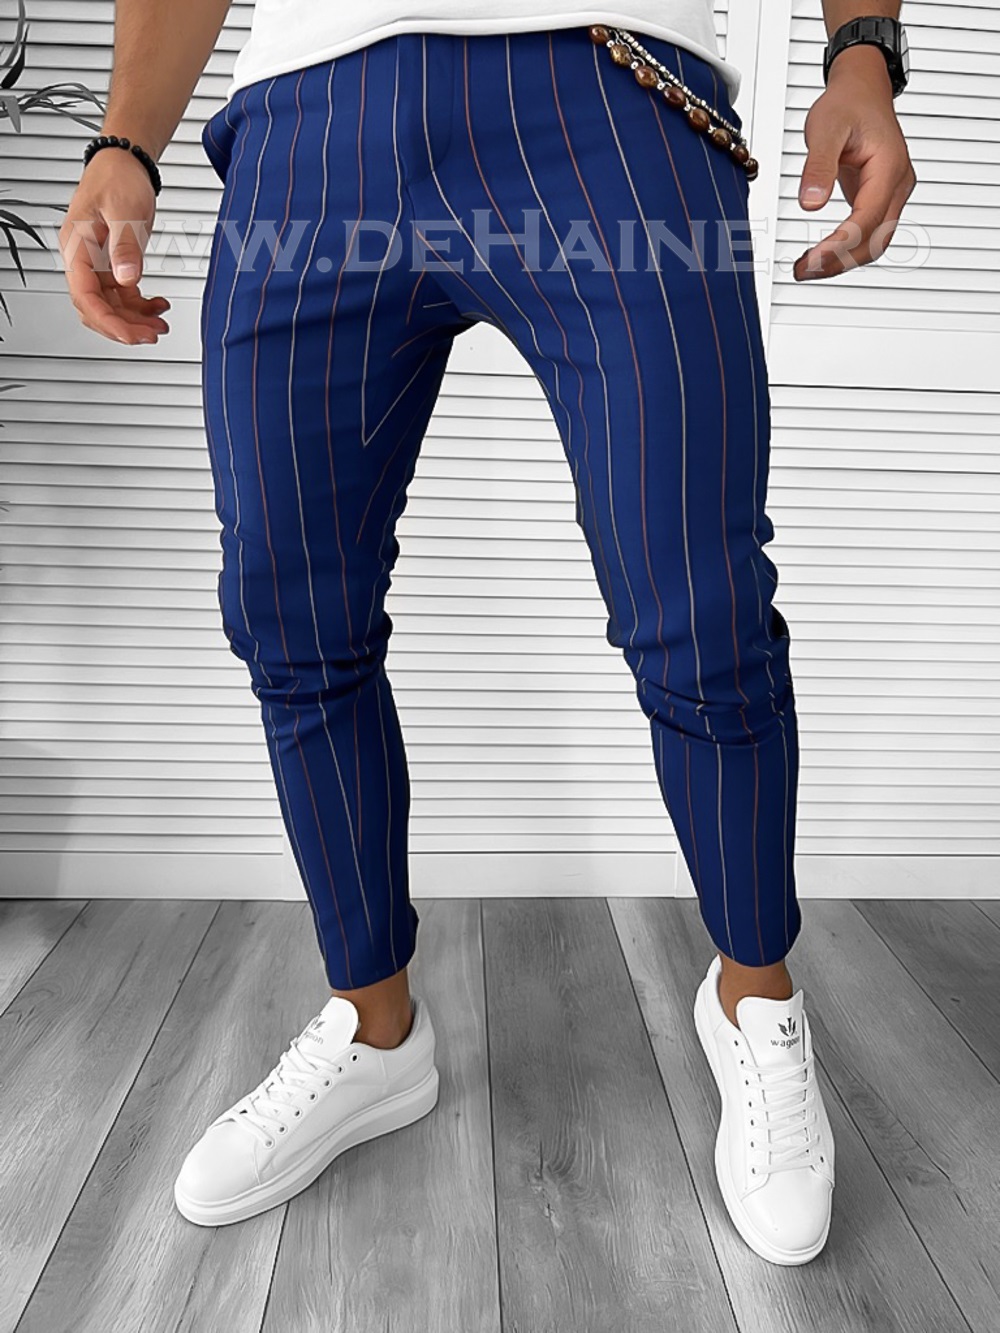 Pantaloni barbati casual regular fit bleumarin in dungi B7871 F2-4.1.2 / 26-1.2 E~